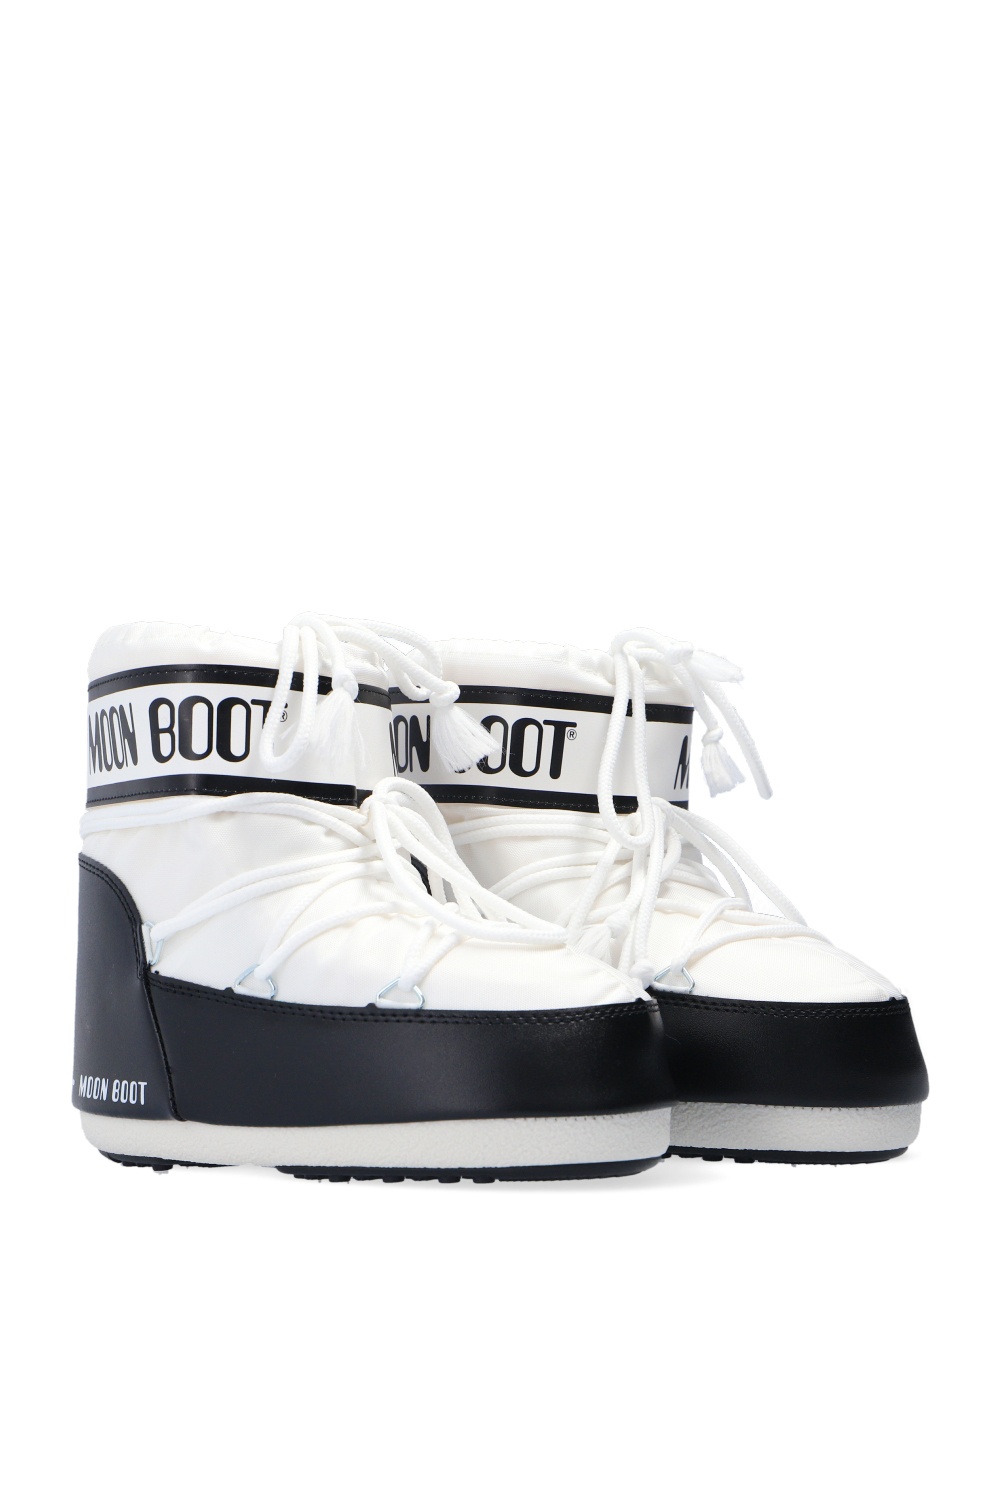 Reebok Zig 3D Storm Marathon Running Shoes Sneakers FX4391 ‘Classic Low’ snow boots